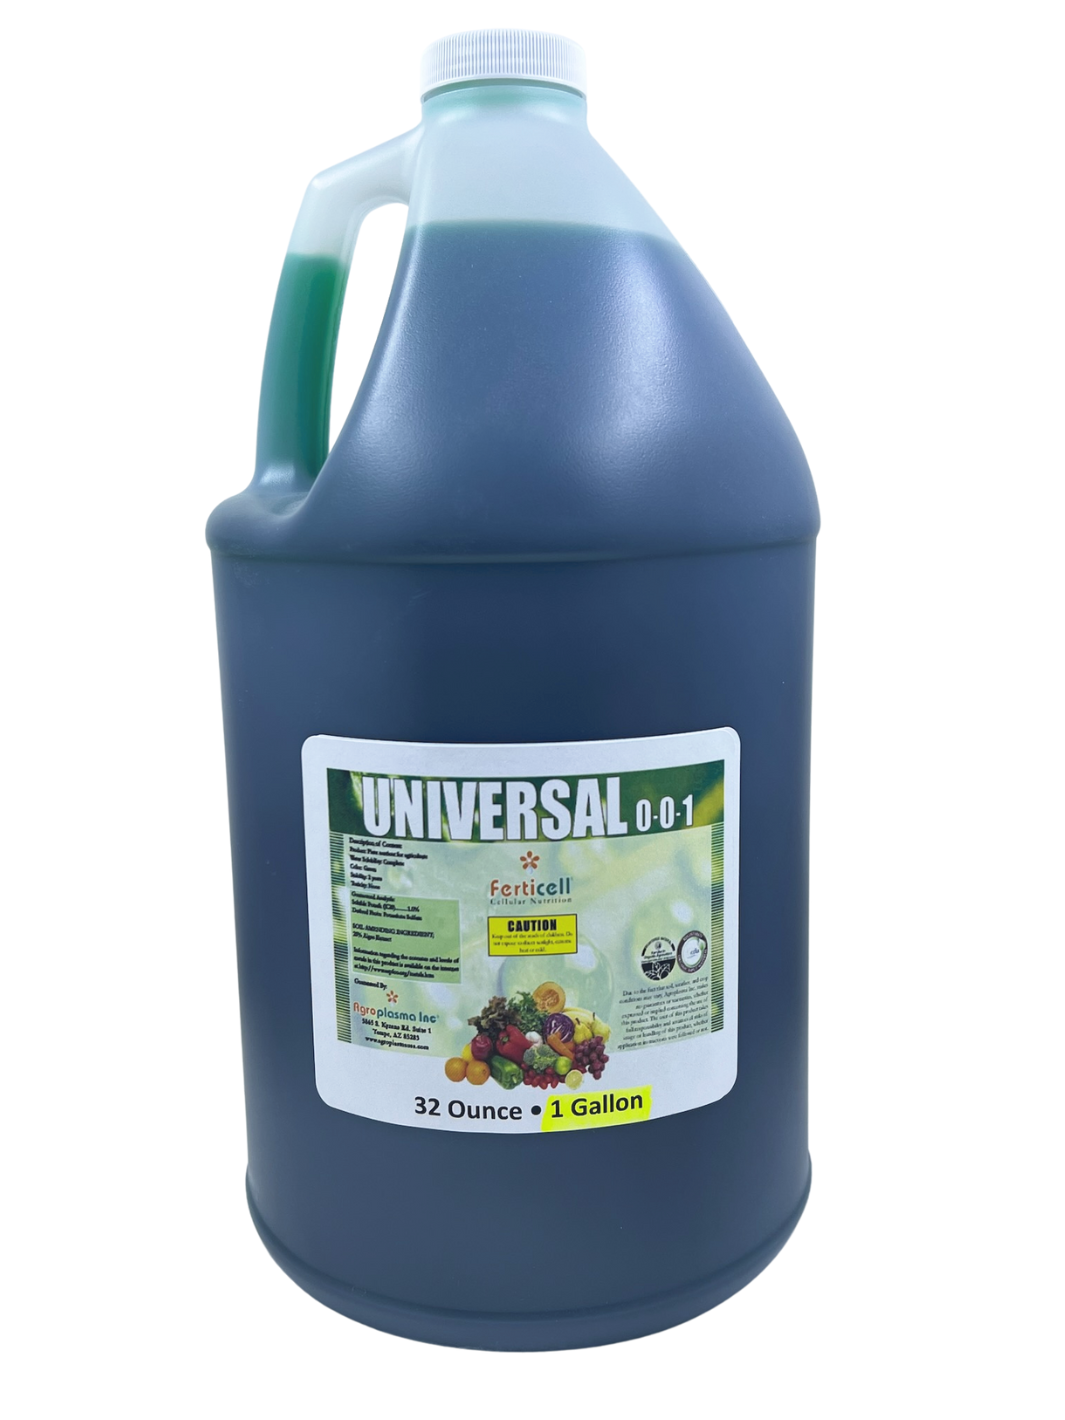 1 Gallon of Ferticell Universal 0-0-1 Freshwater Algae Extract Organic Fertilizer